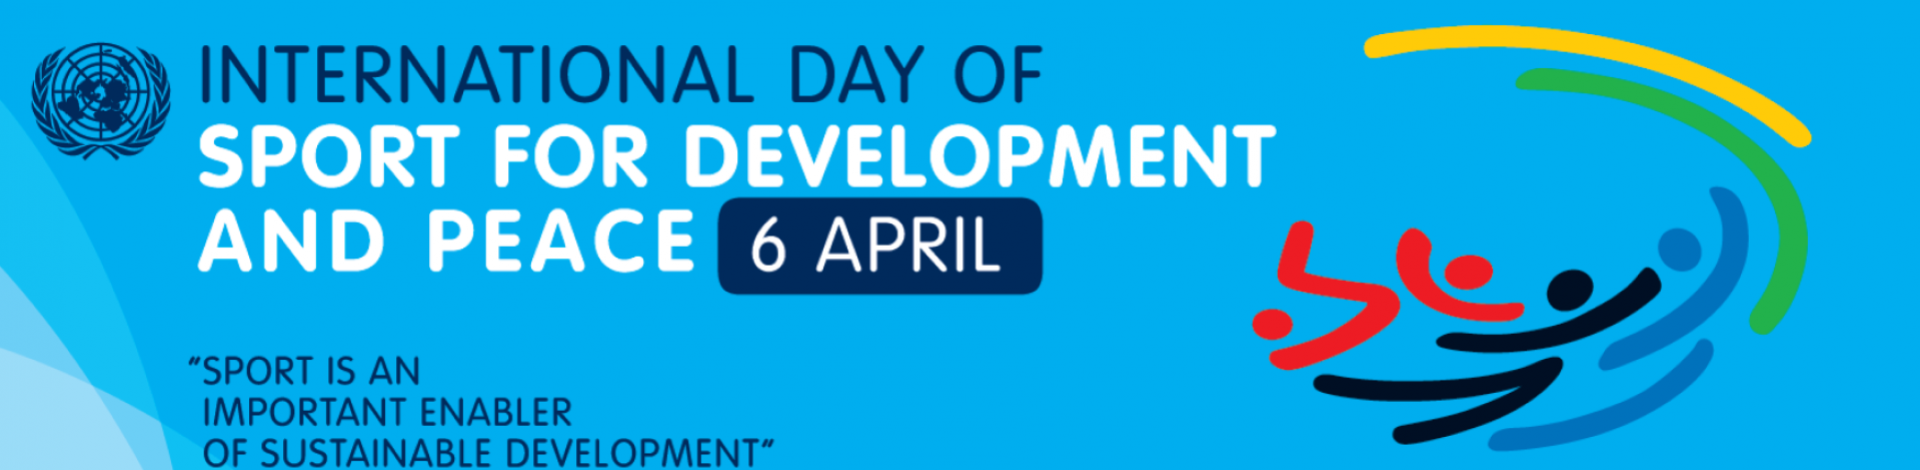 International Day of Sport for Development & Peace banner